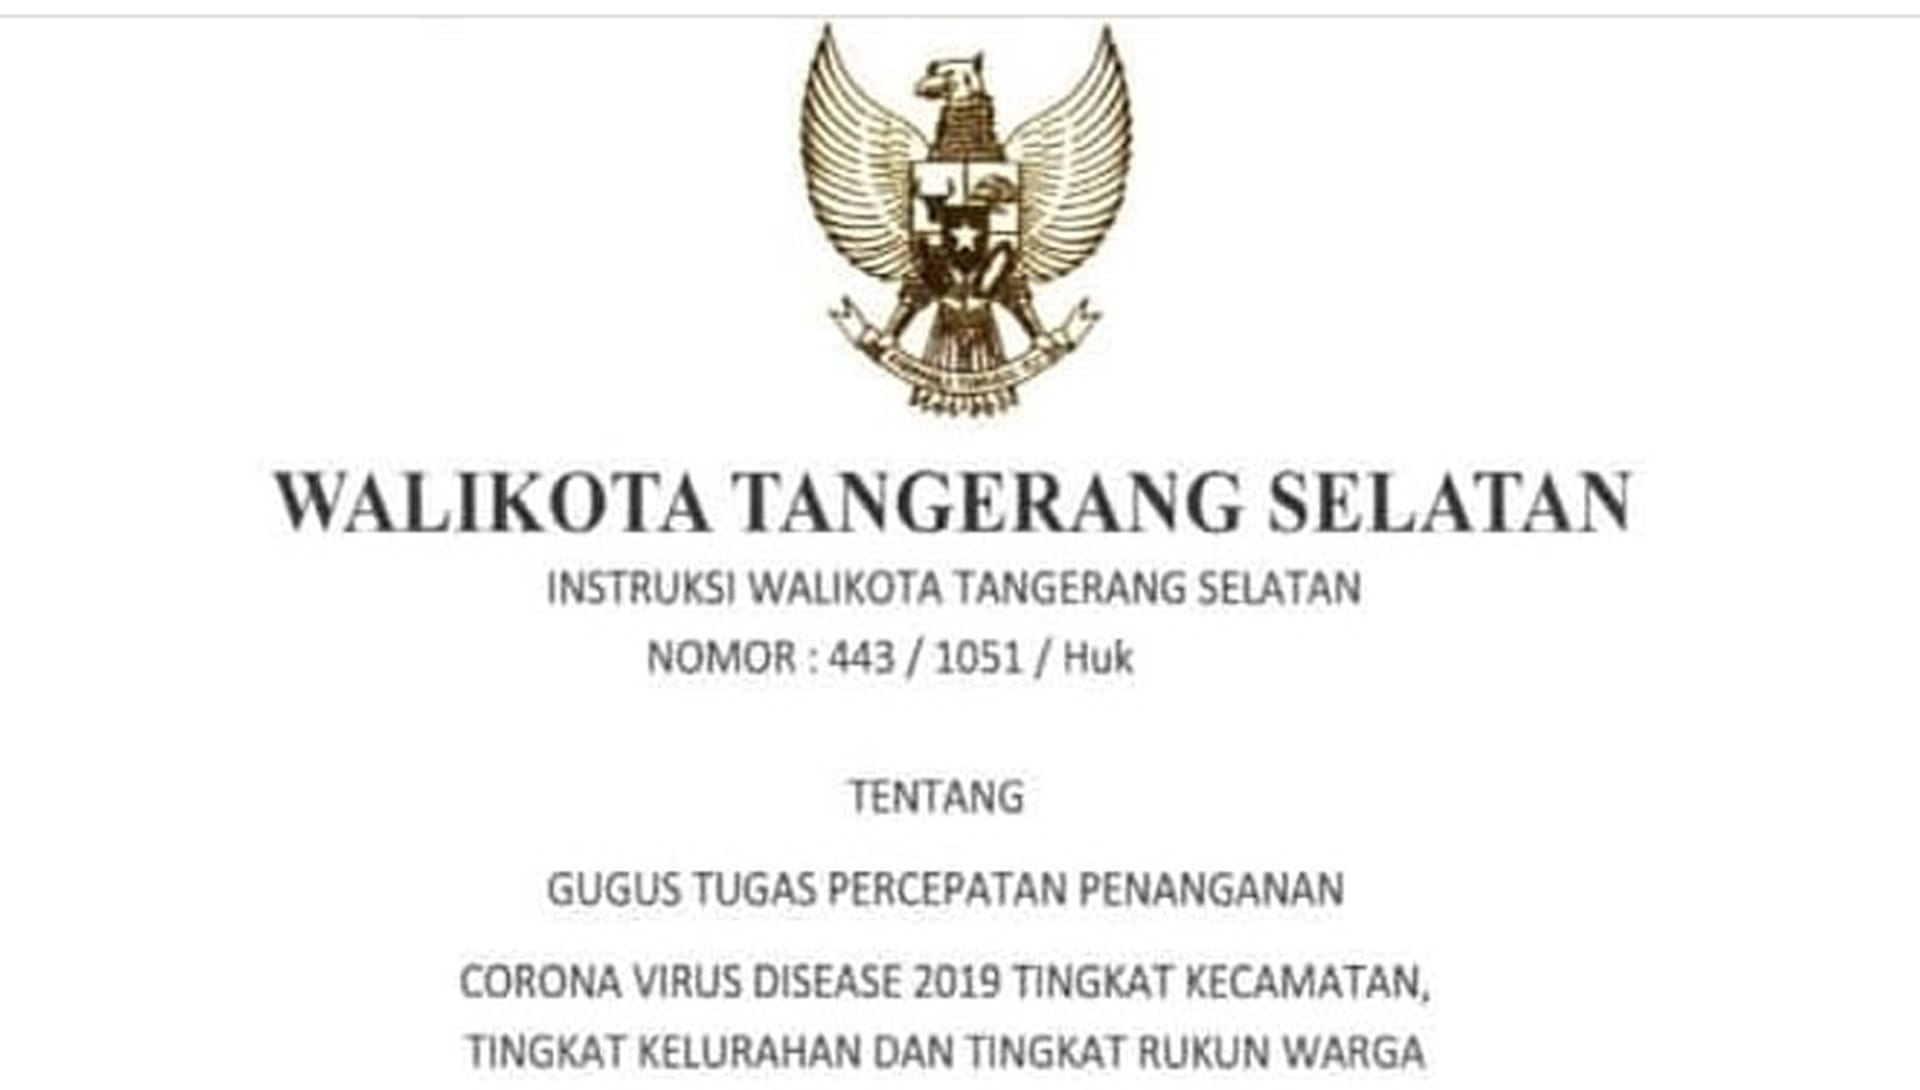 Keputusan Walikota Tangerang Selatan Nomor 443/1051/Huk